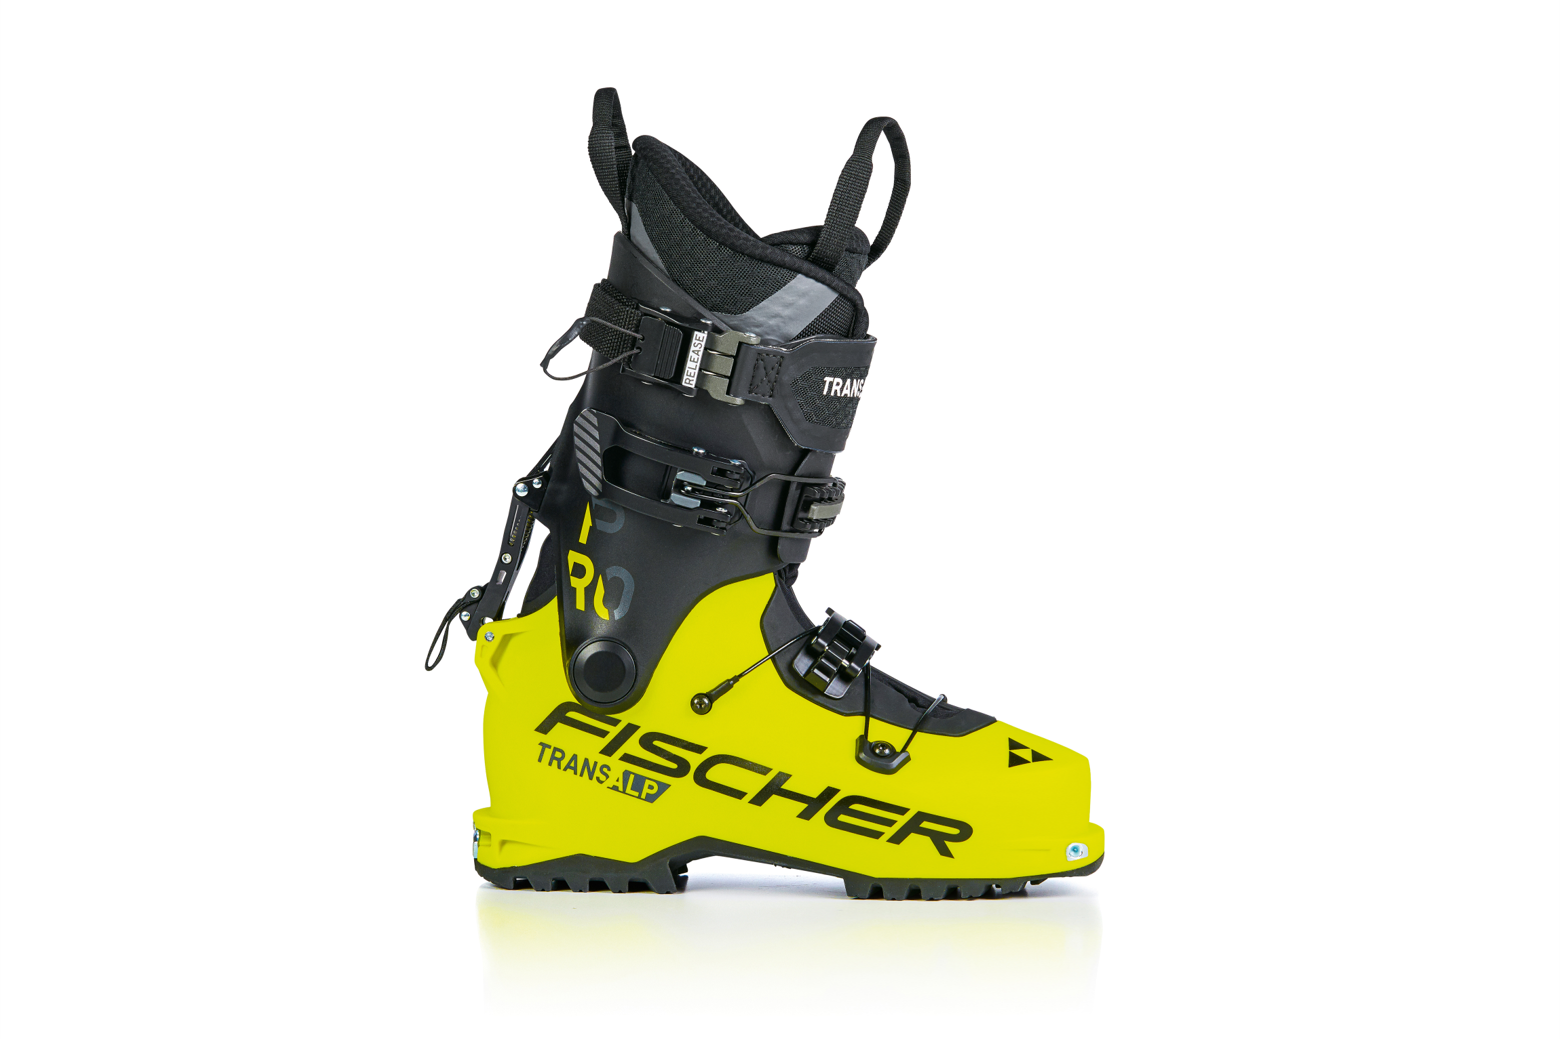 High performance ski boot from Fischer Sports using Pebax materials